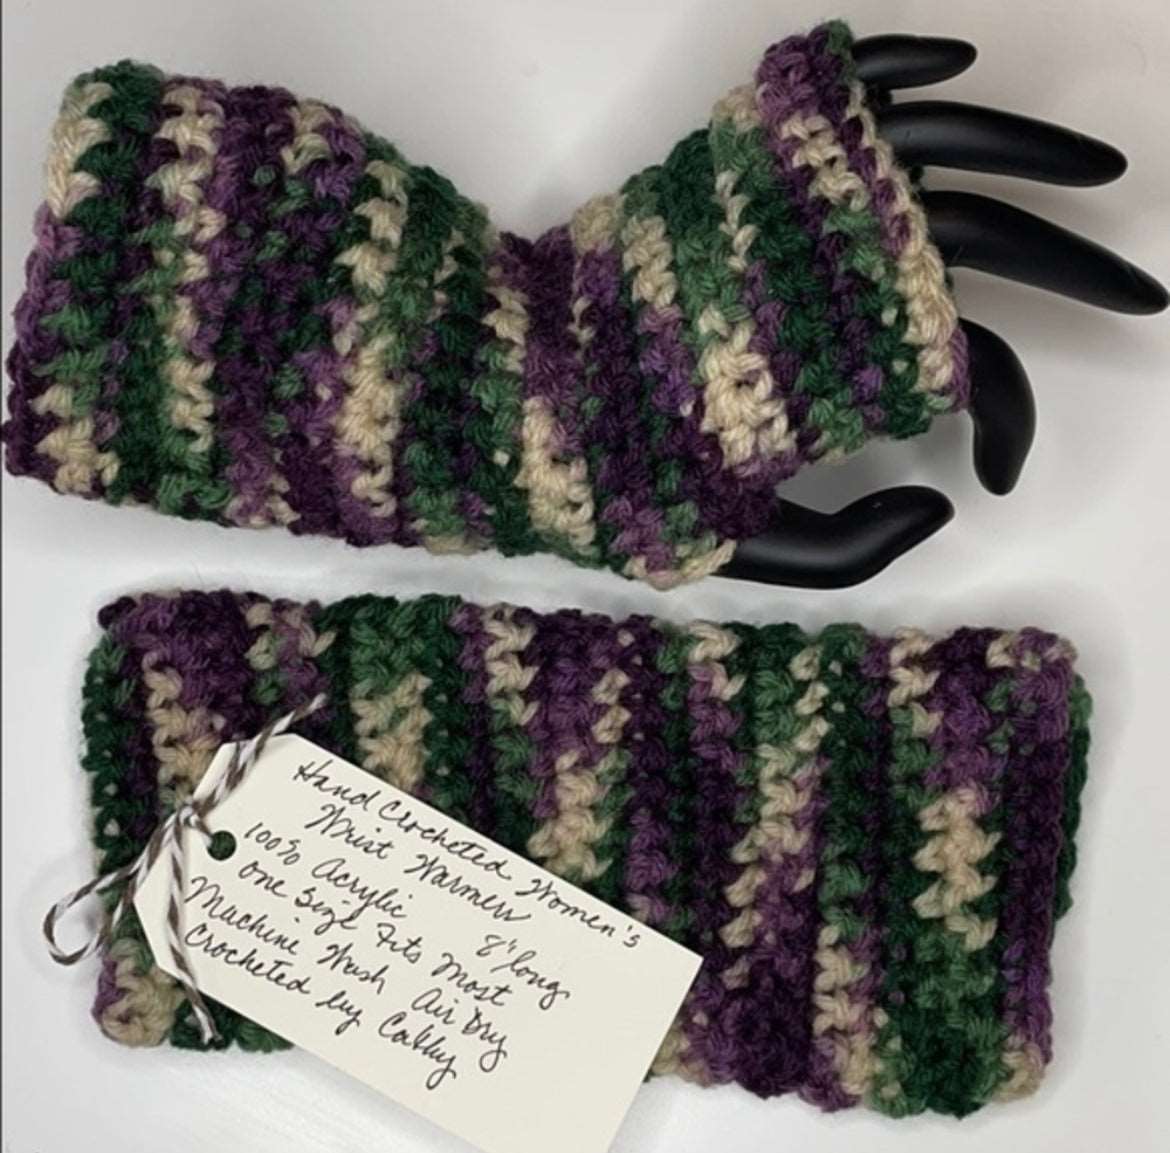 Gaming Texting Fingerless Gloves Marbled Purple Green Tan Crochet Knit Writing Tech Wrist Warmers